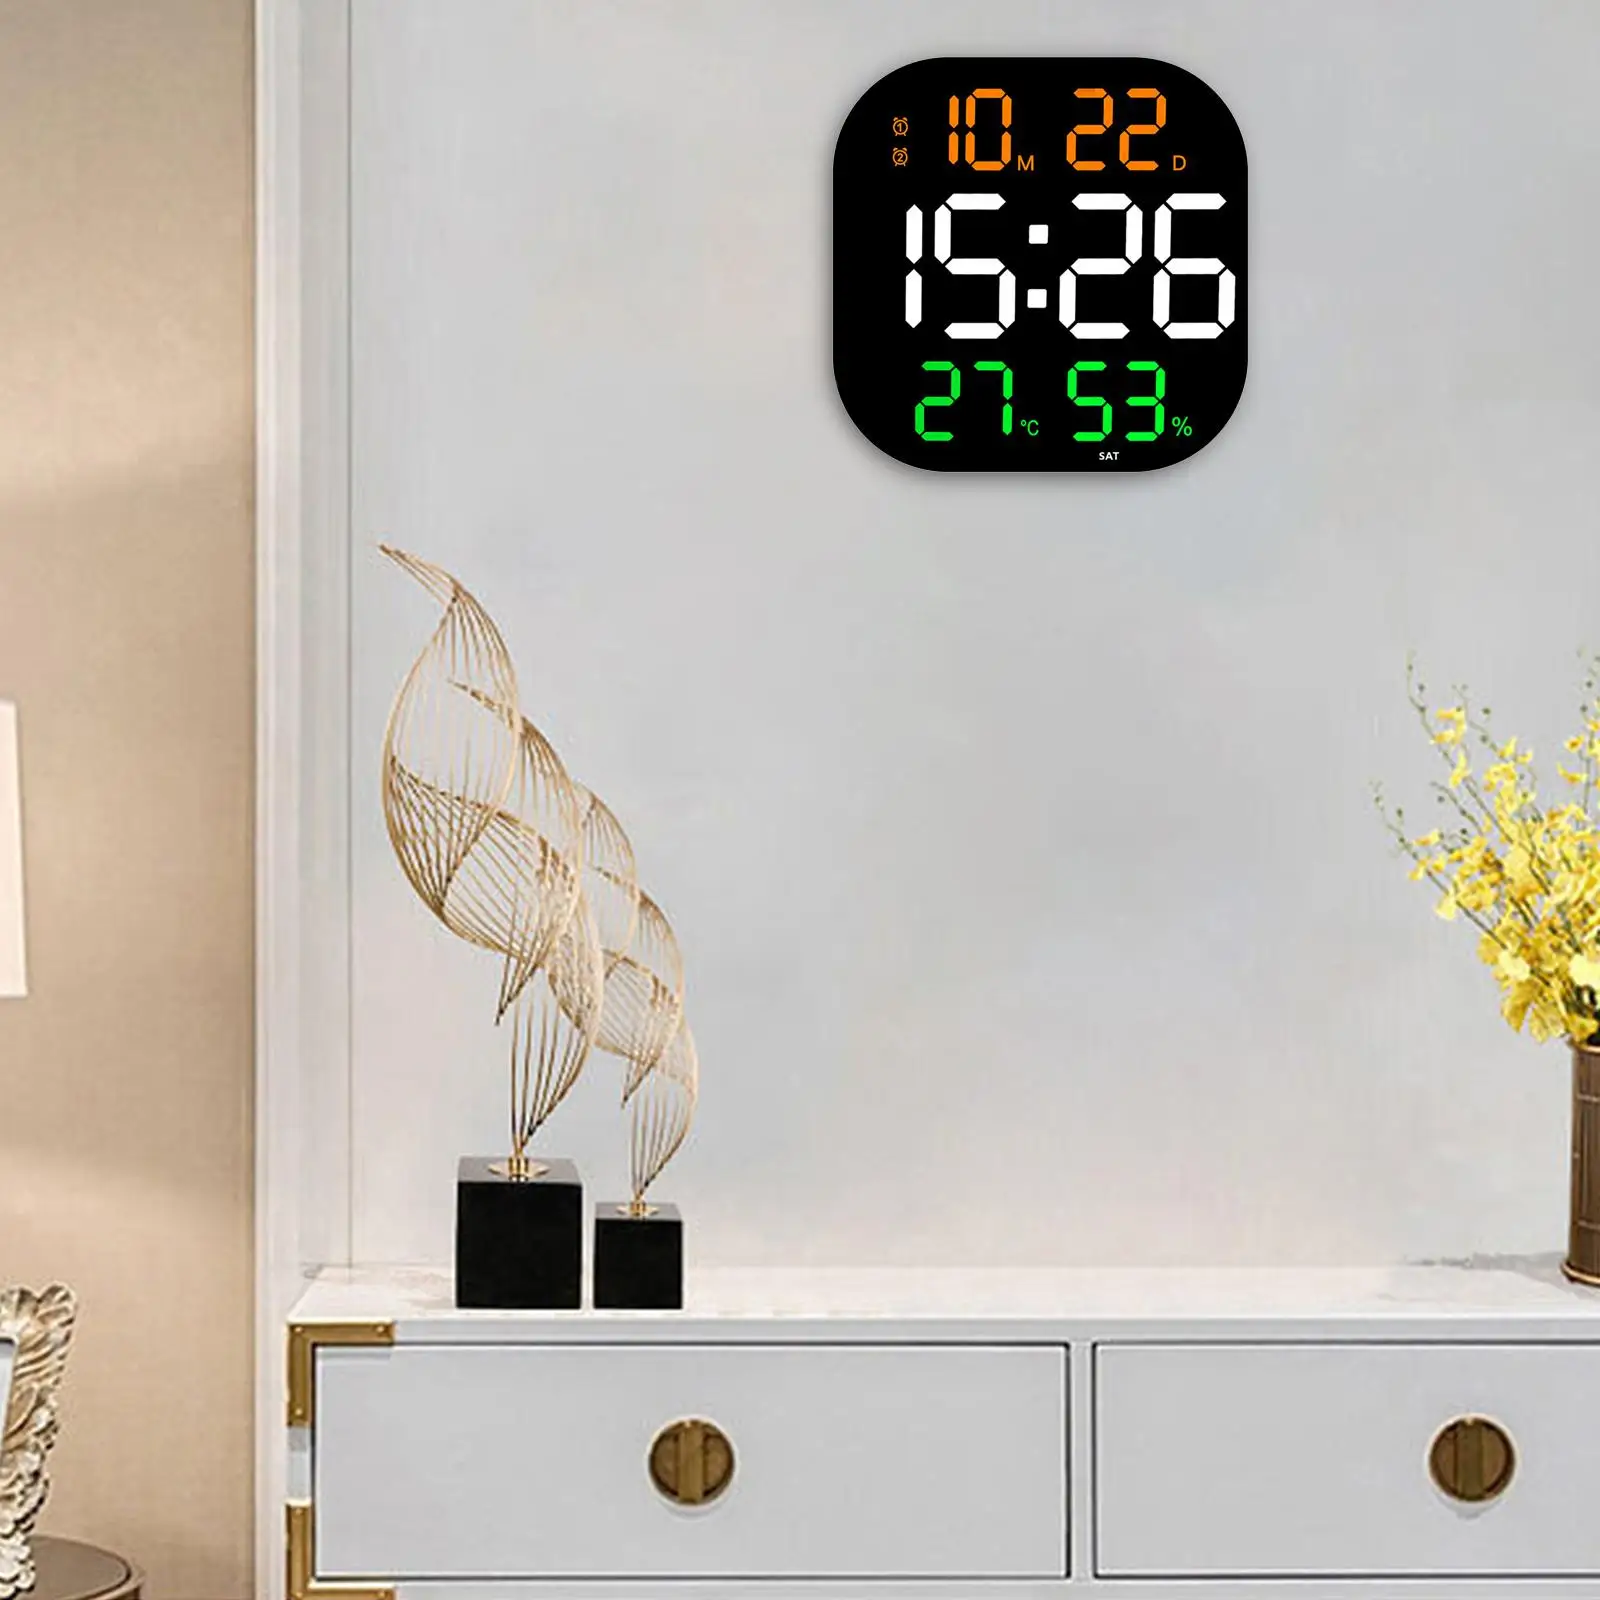 Modern Digital Wall Clock Adjustable Brightness LED Clocks Temperature Month Date Display for Home Decor